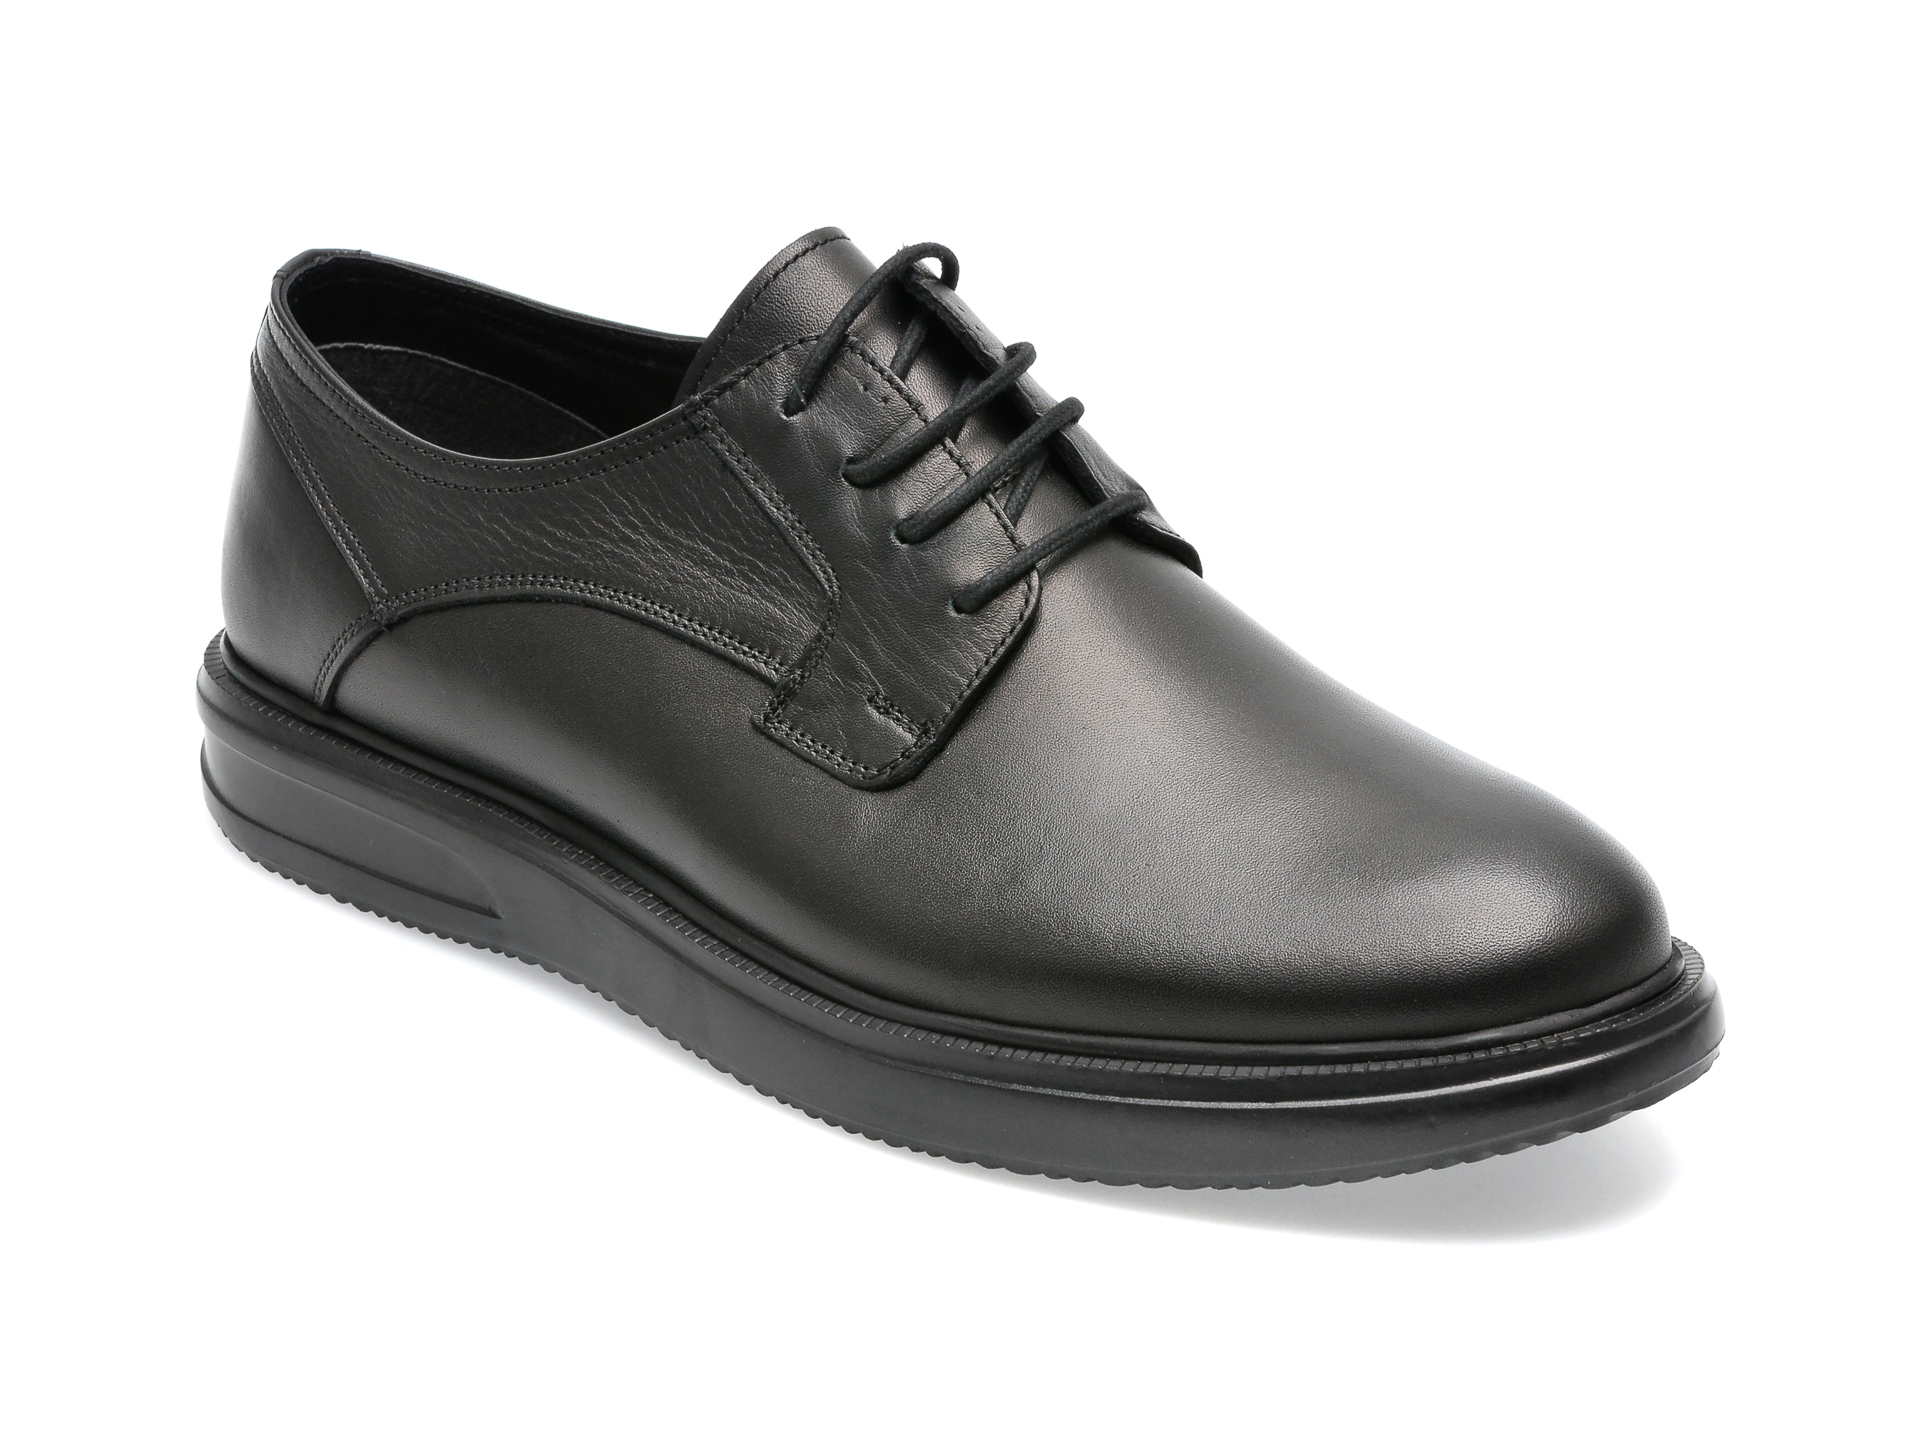 Pantofi OTTER negri, E721, din piele naturala